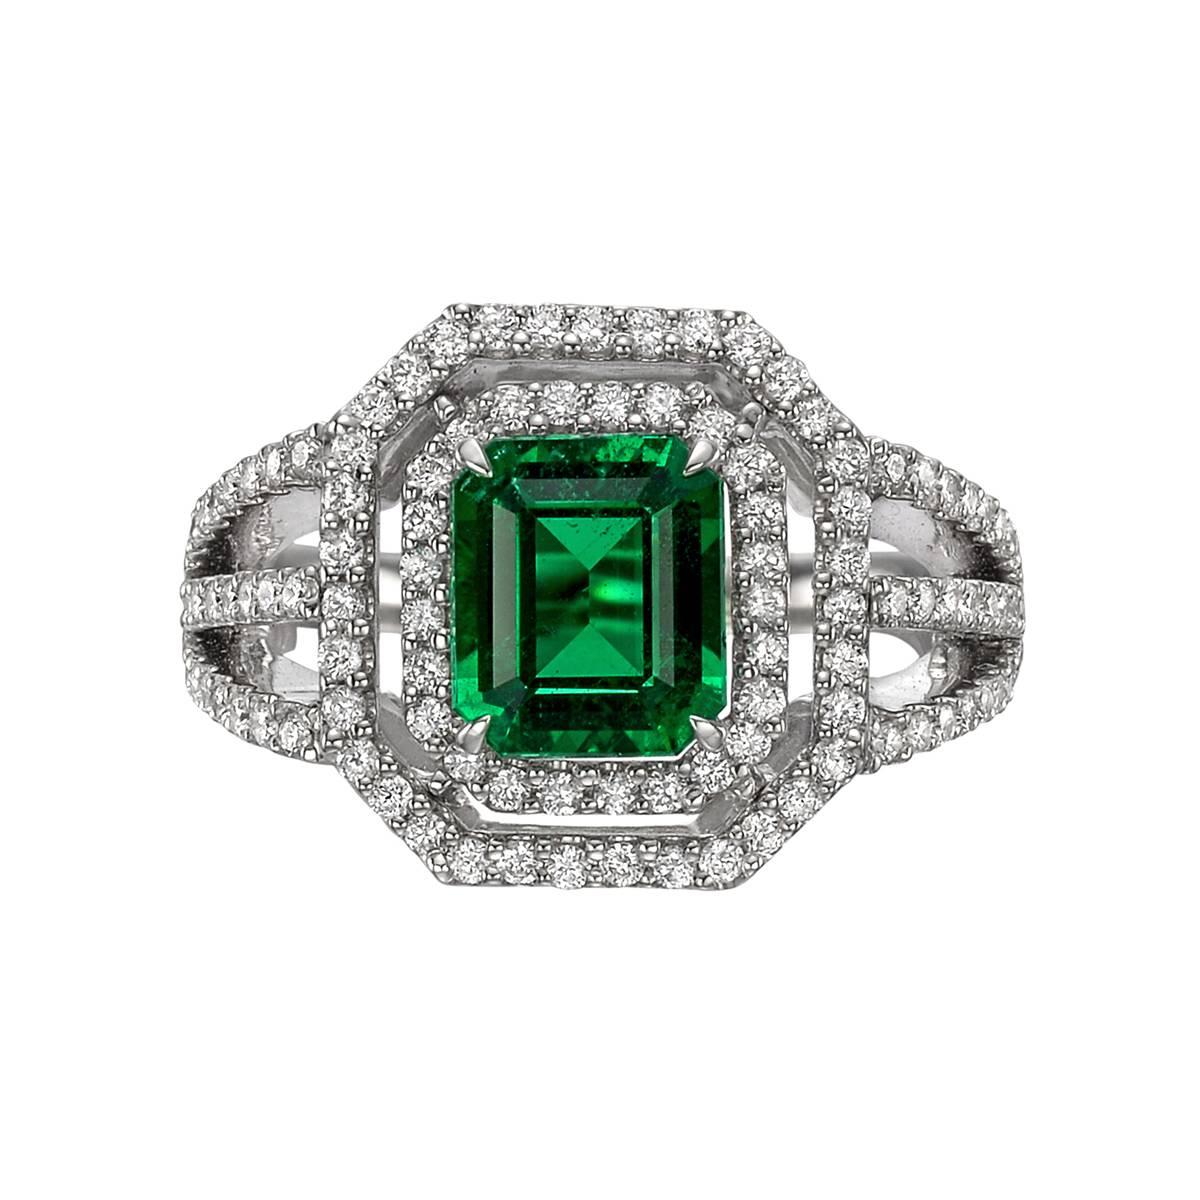 1.49 Carat No-Oil Emerald Diamond Ring